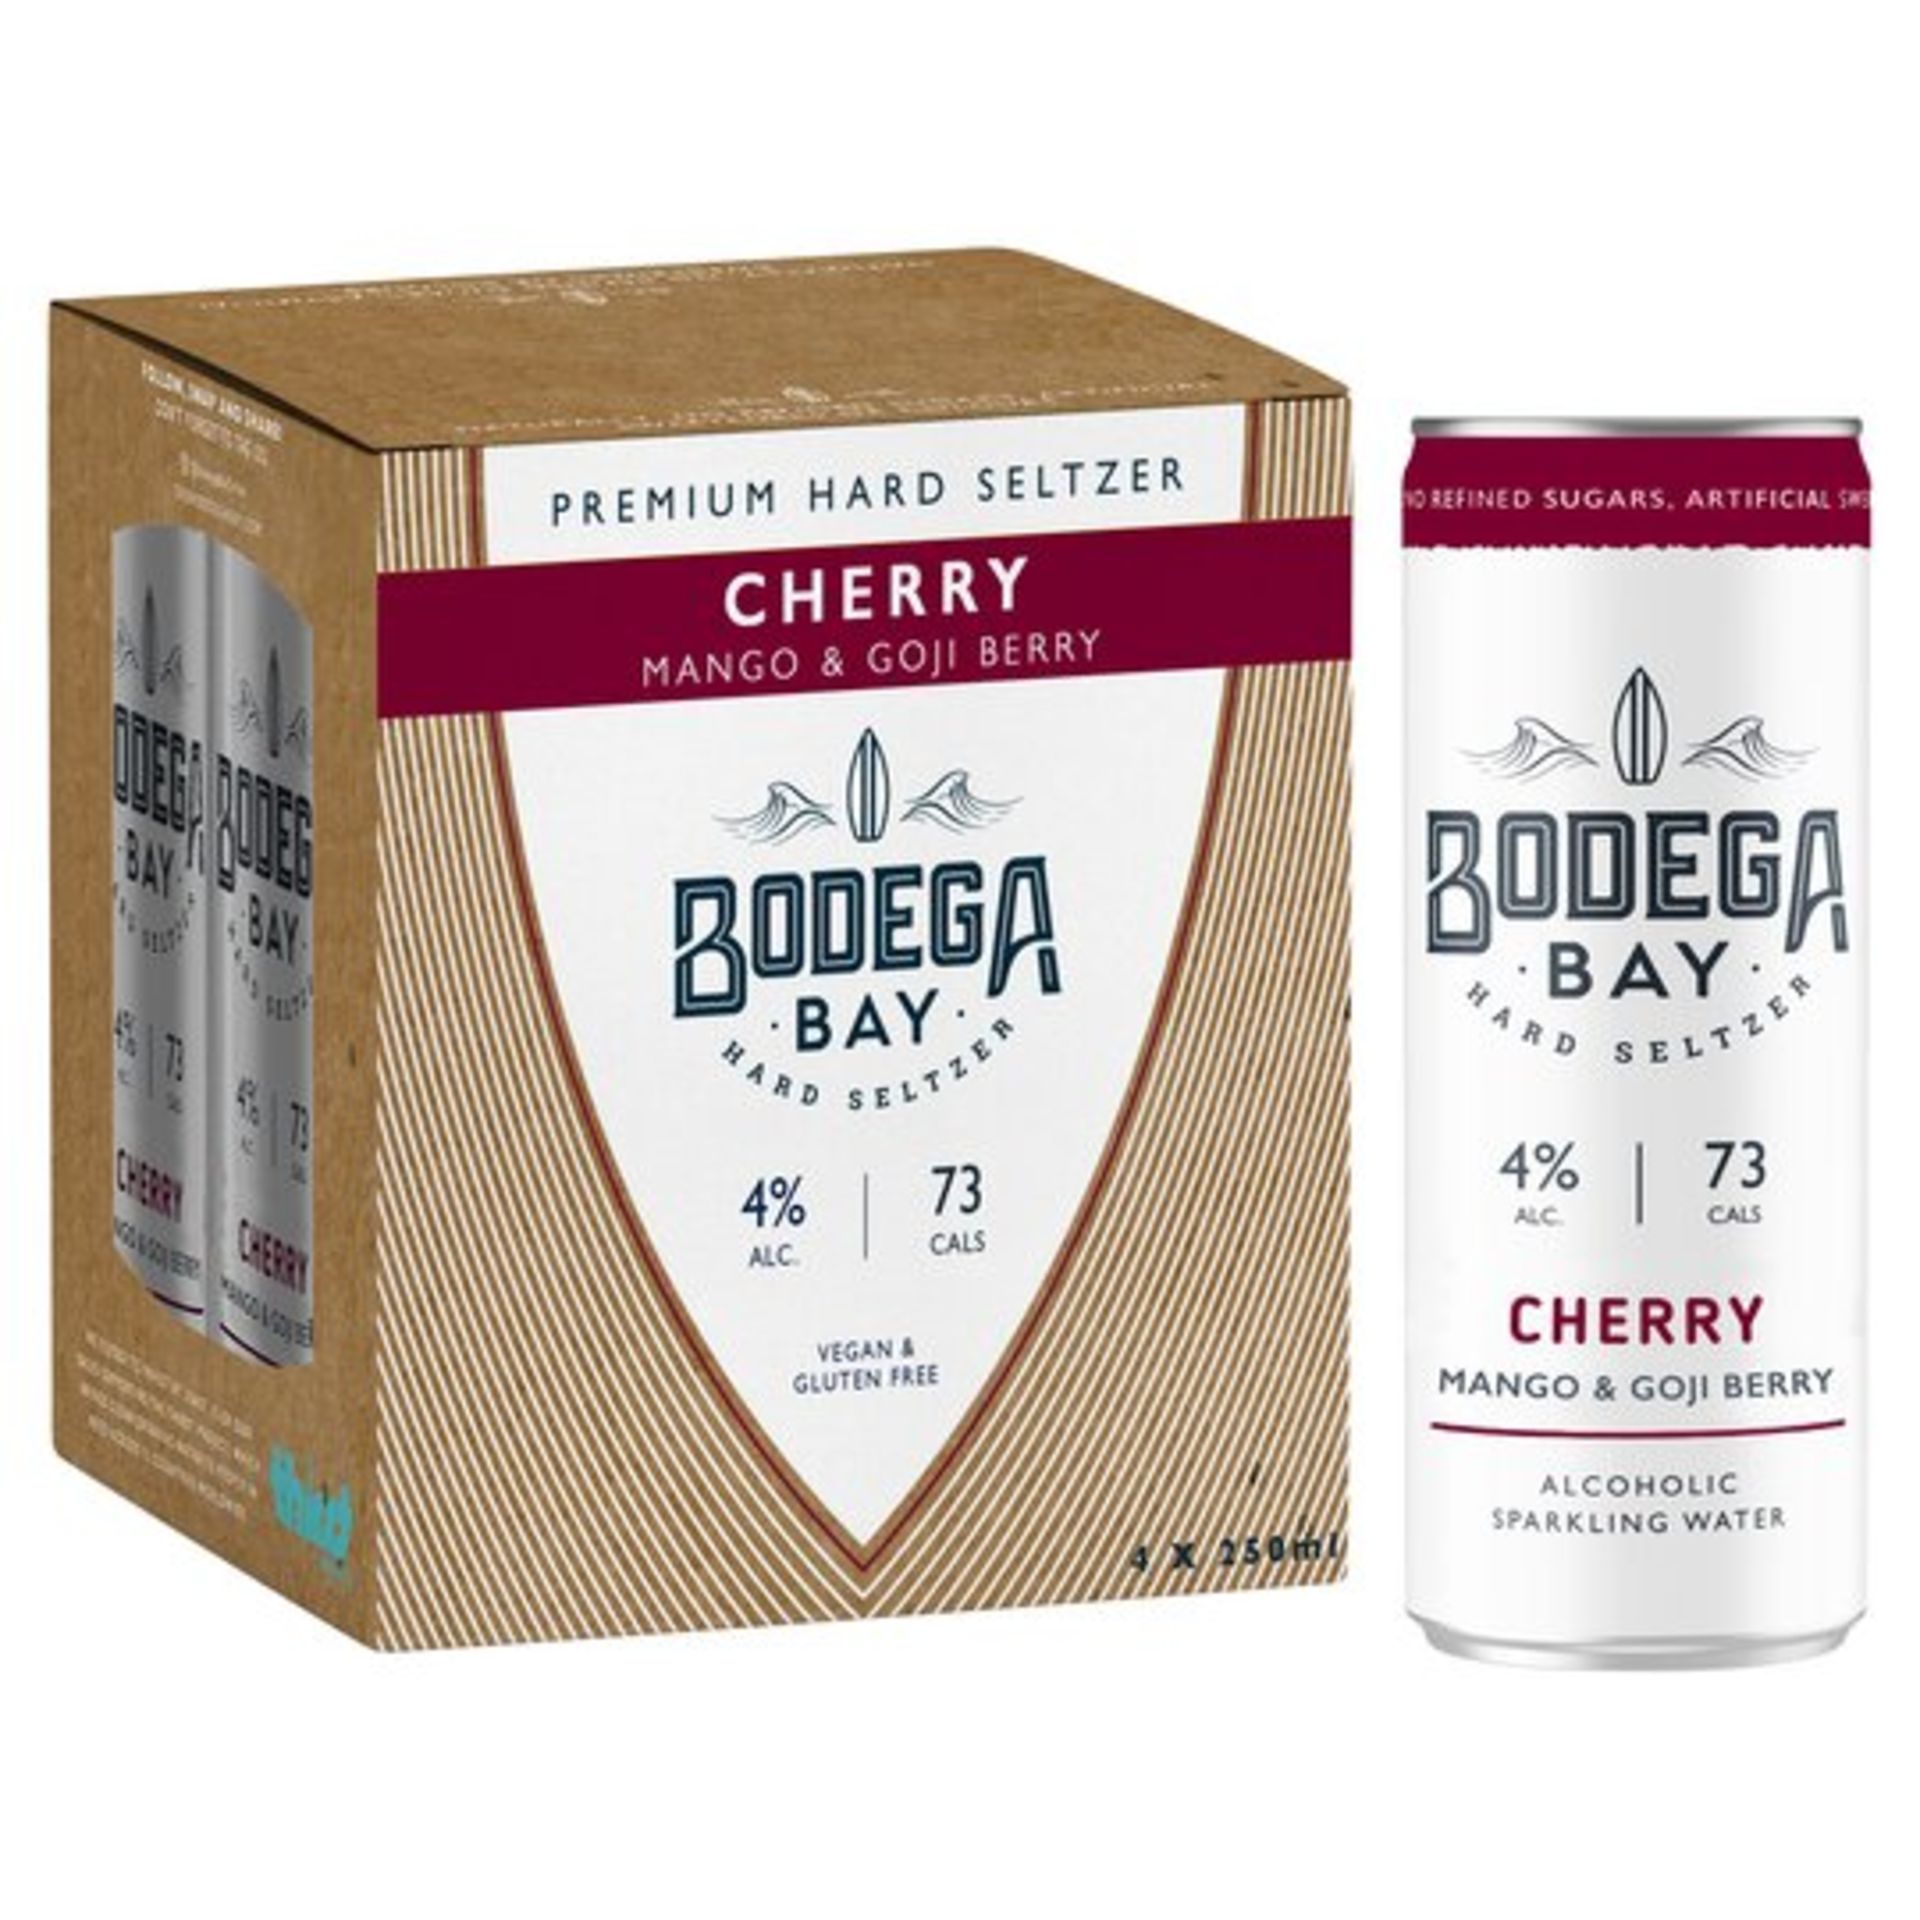 24 x Bodega Bay Hard Seltzer 250ml Alcoholic Sparkling Water Drinks - Cherry Mango & Goji Berry - 4% - Image 5 of 7